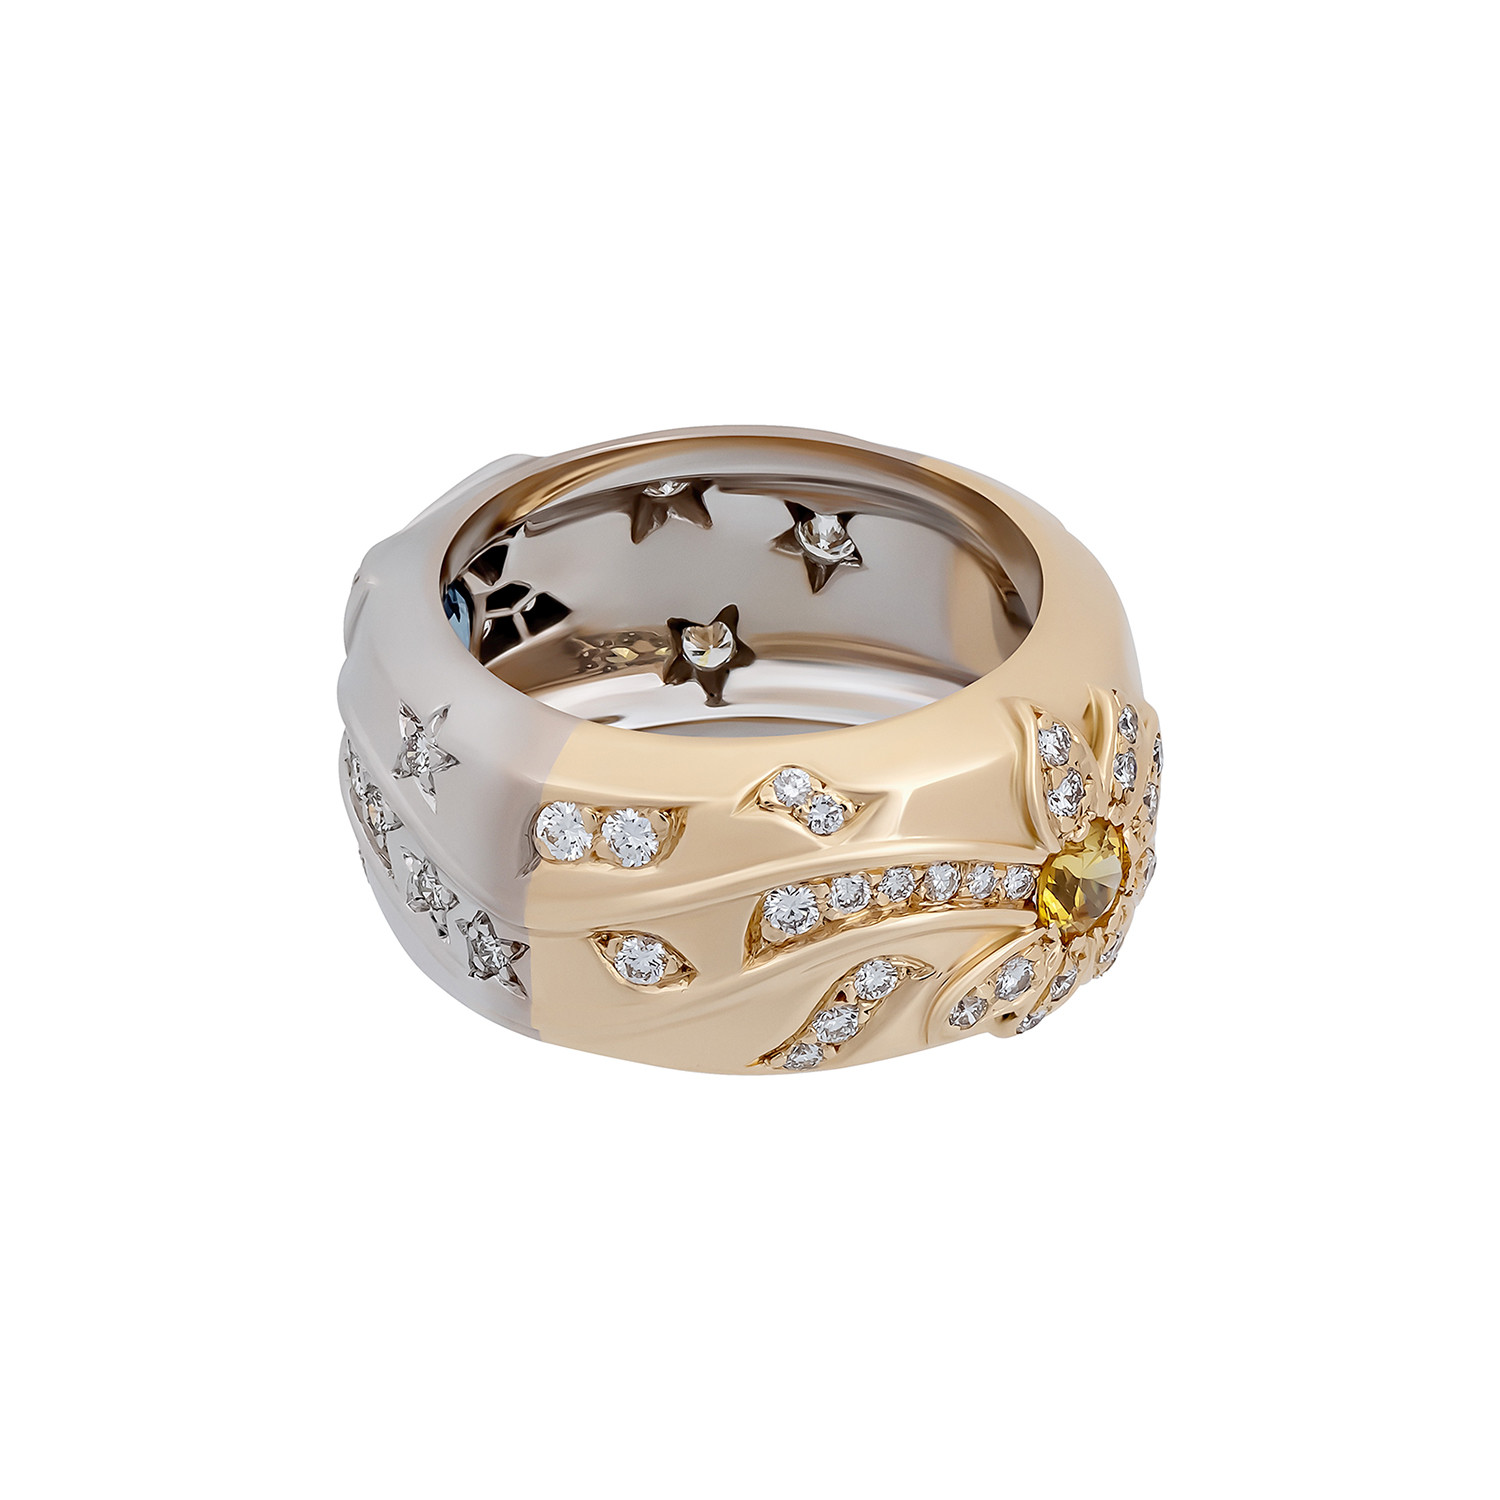 Vintage Chanel 18k TwoTone Gold Comete Diamond Ring // Ring Size 5.25